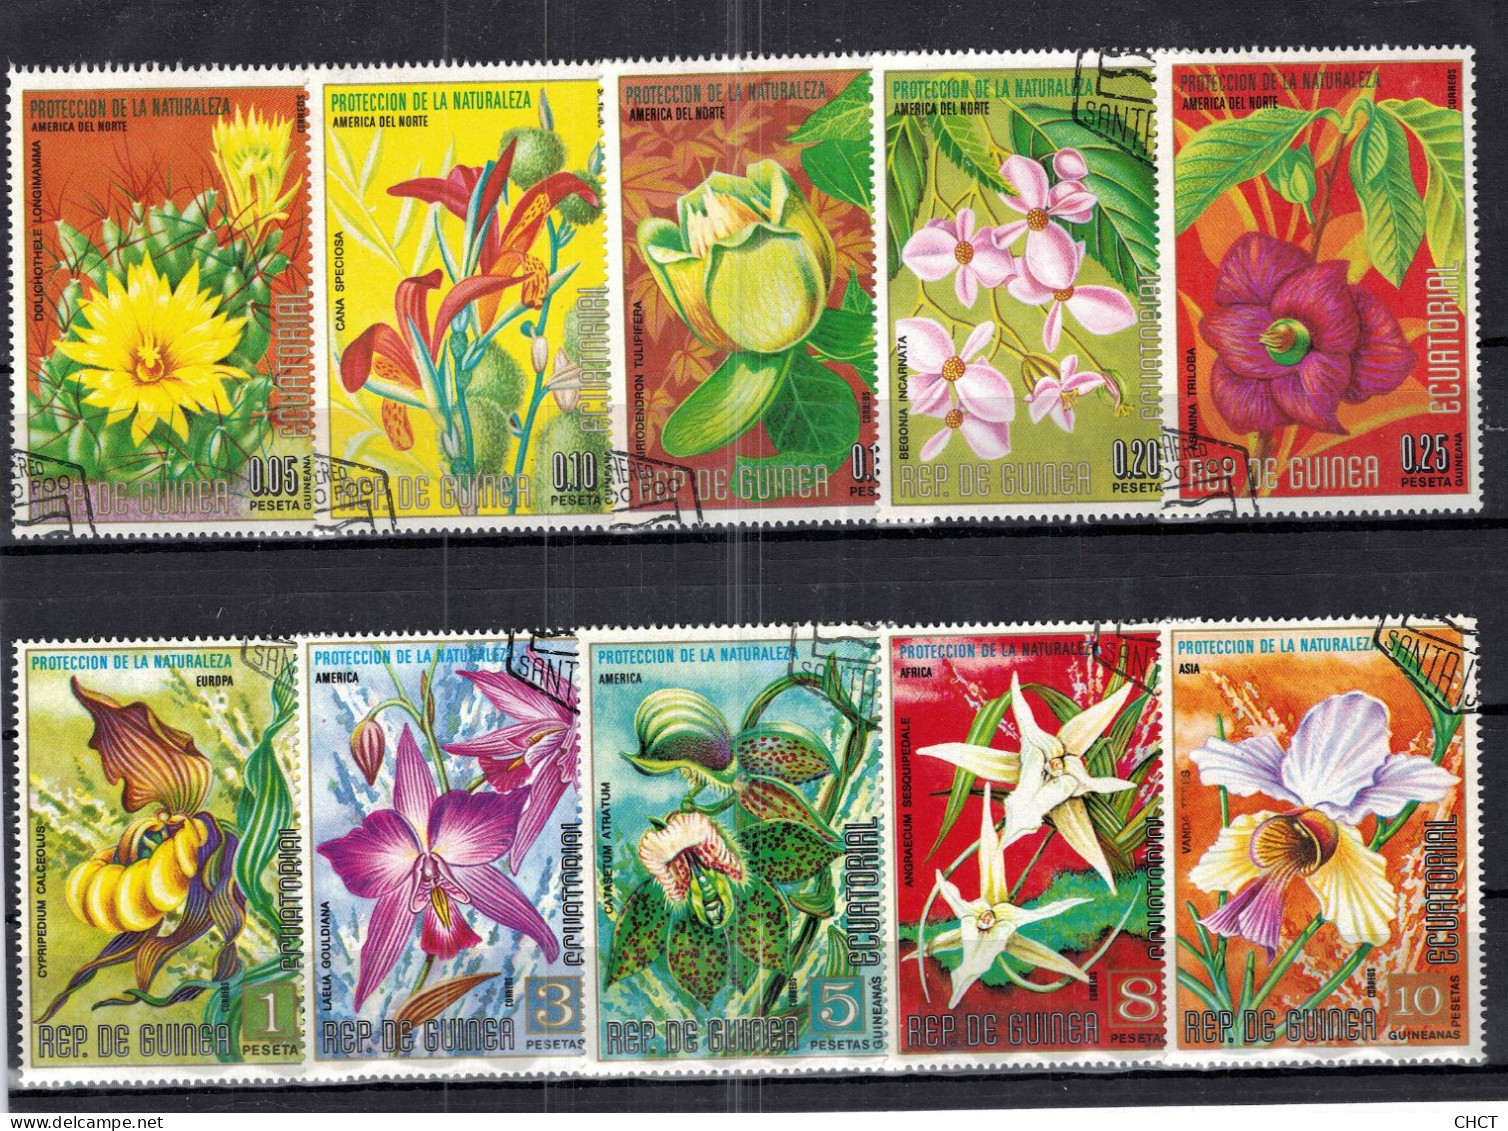 CHCT76 - Nature, Flowers, Used, Complete Series, 1974, Equatorial Guinea - Äquatorial-Guinea